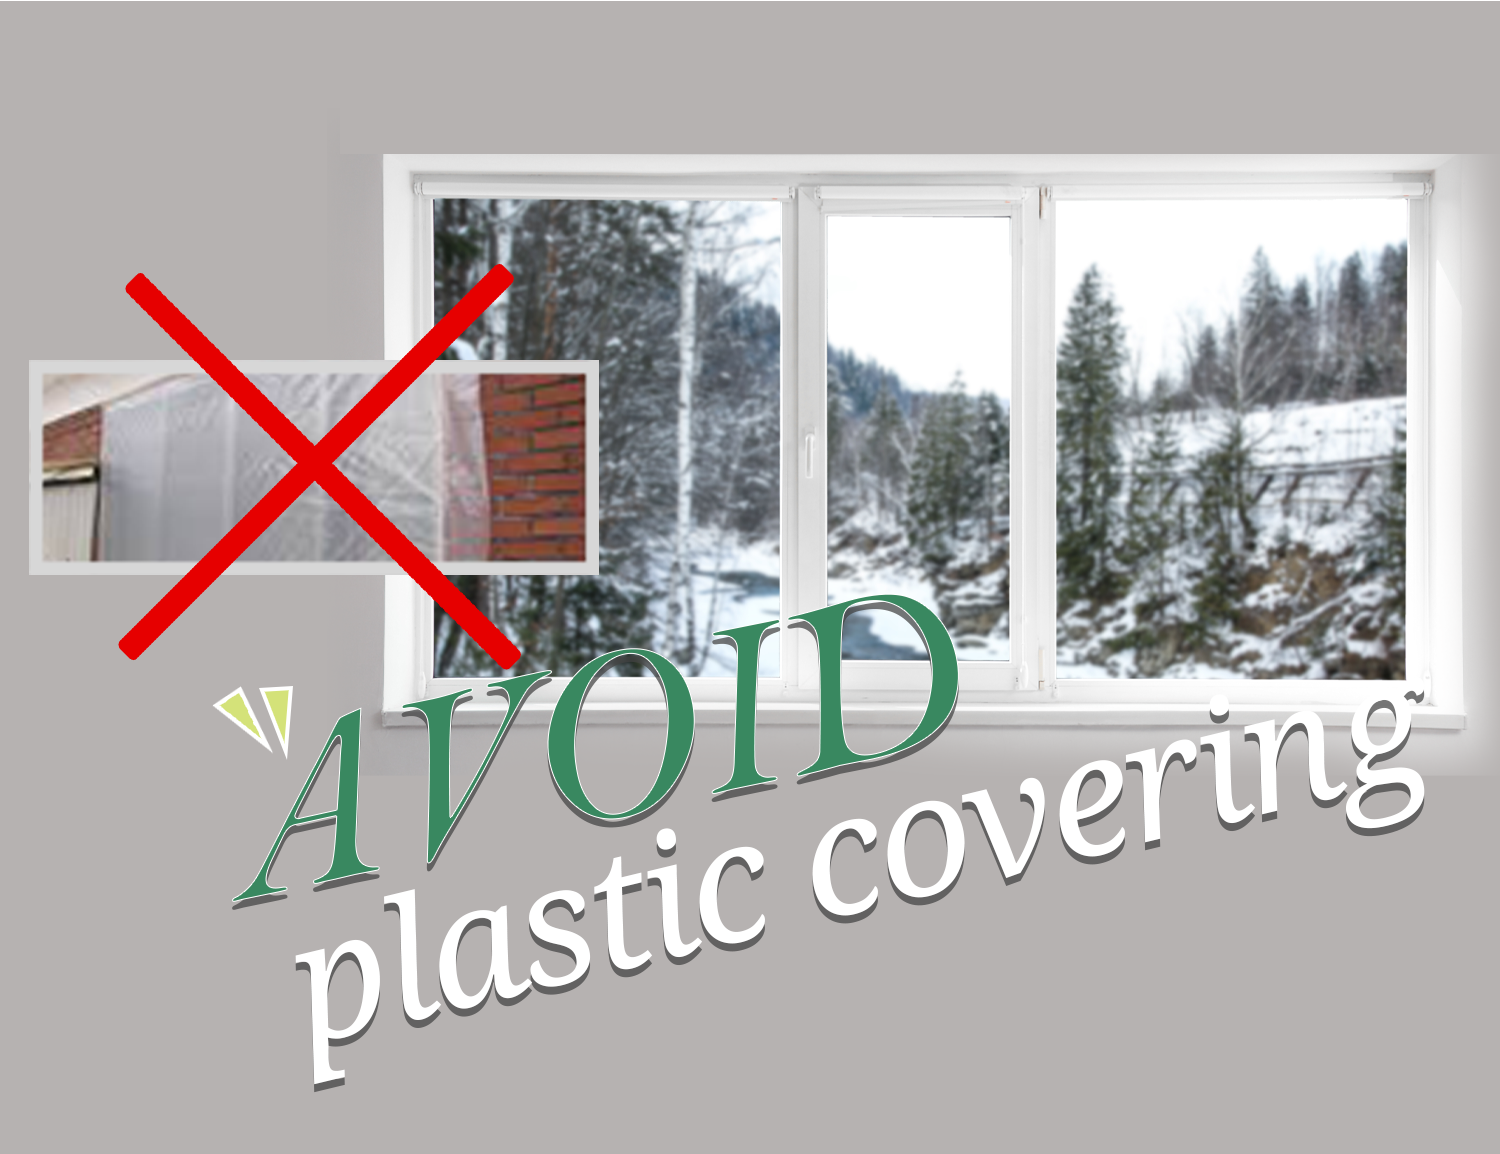 Avoid Plastic Covering